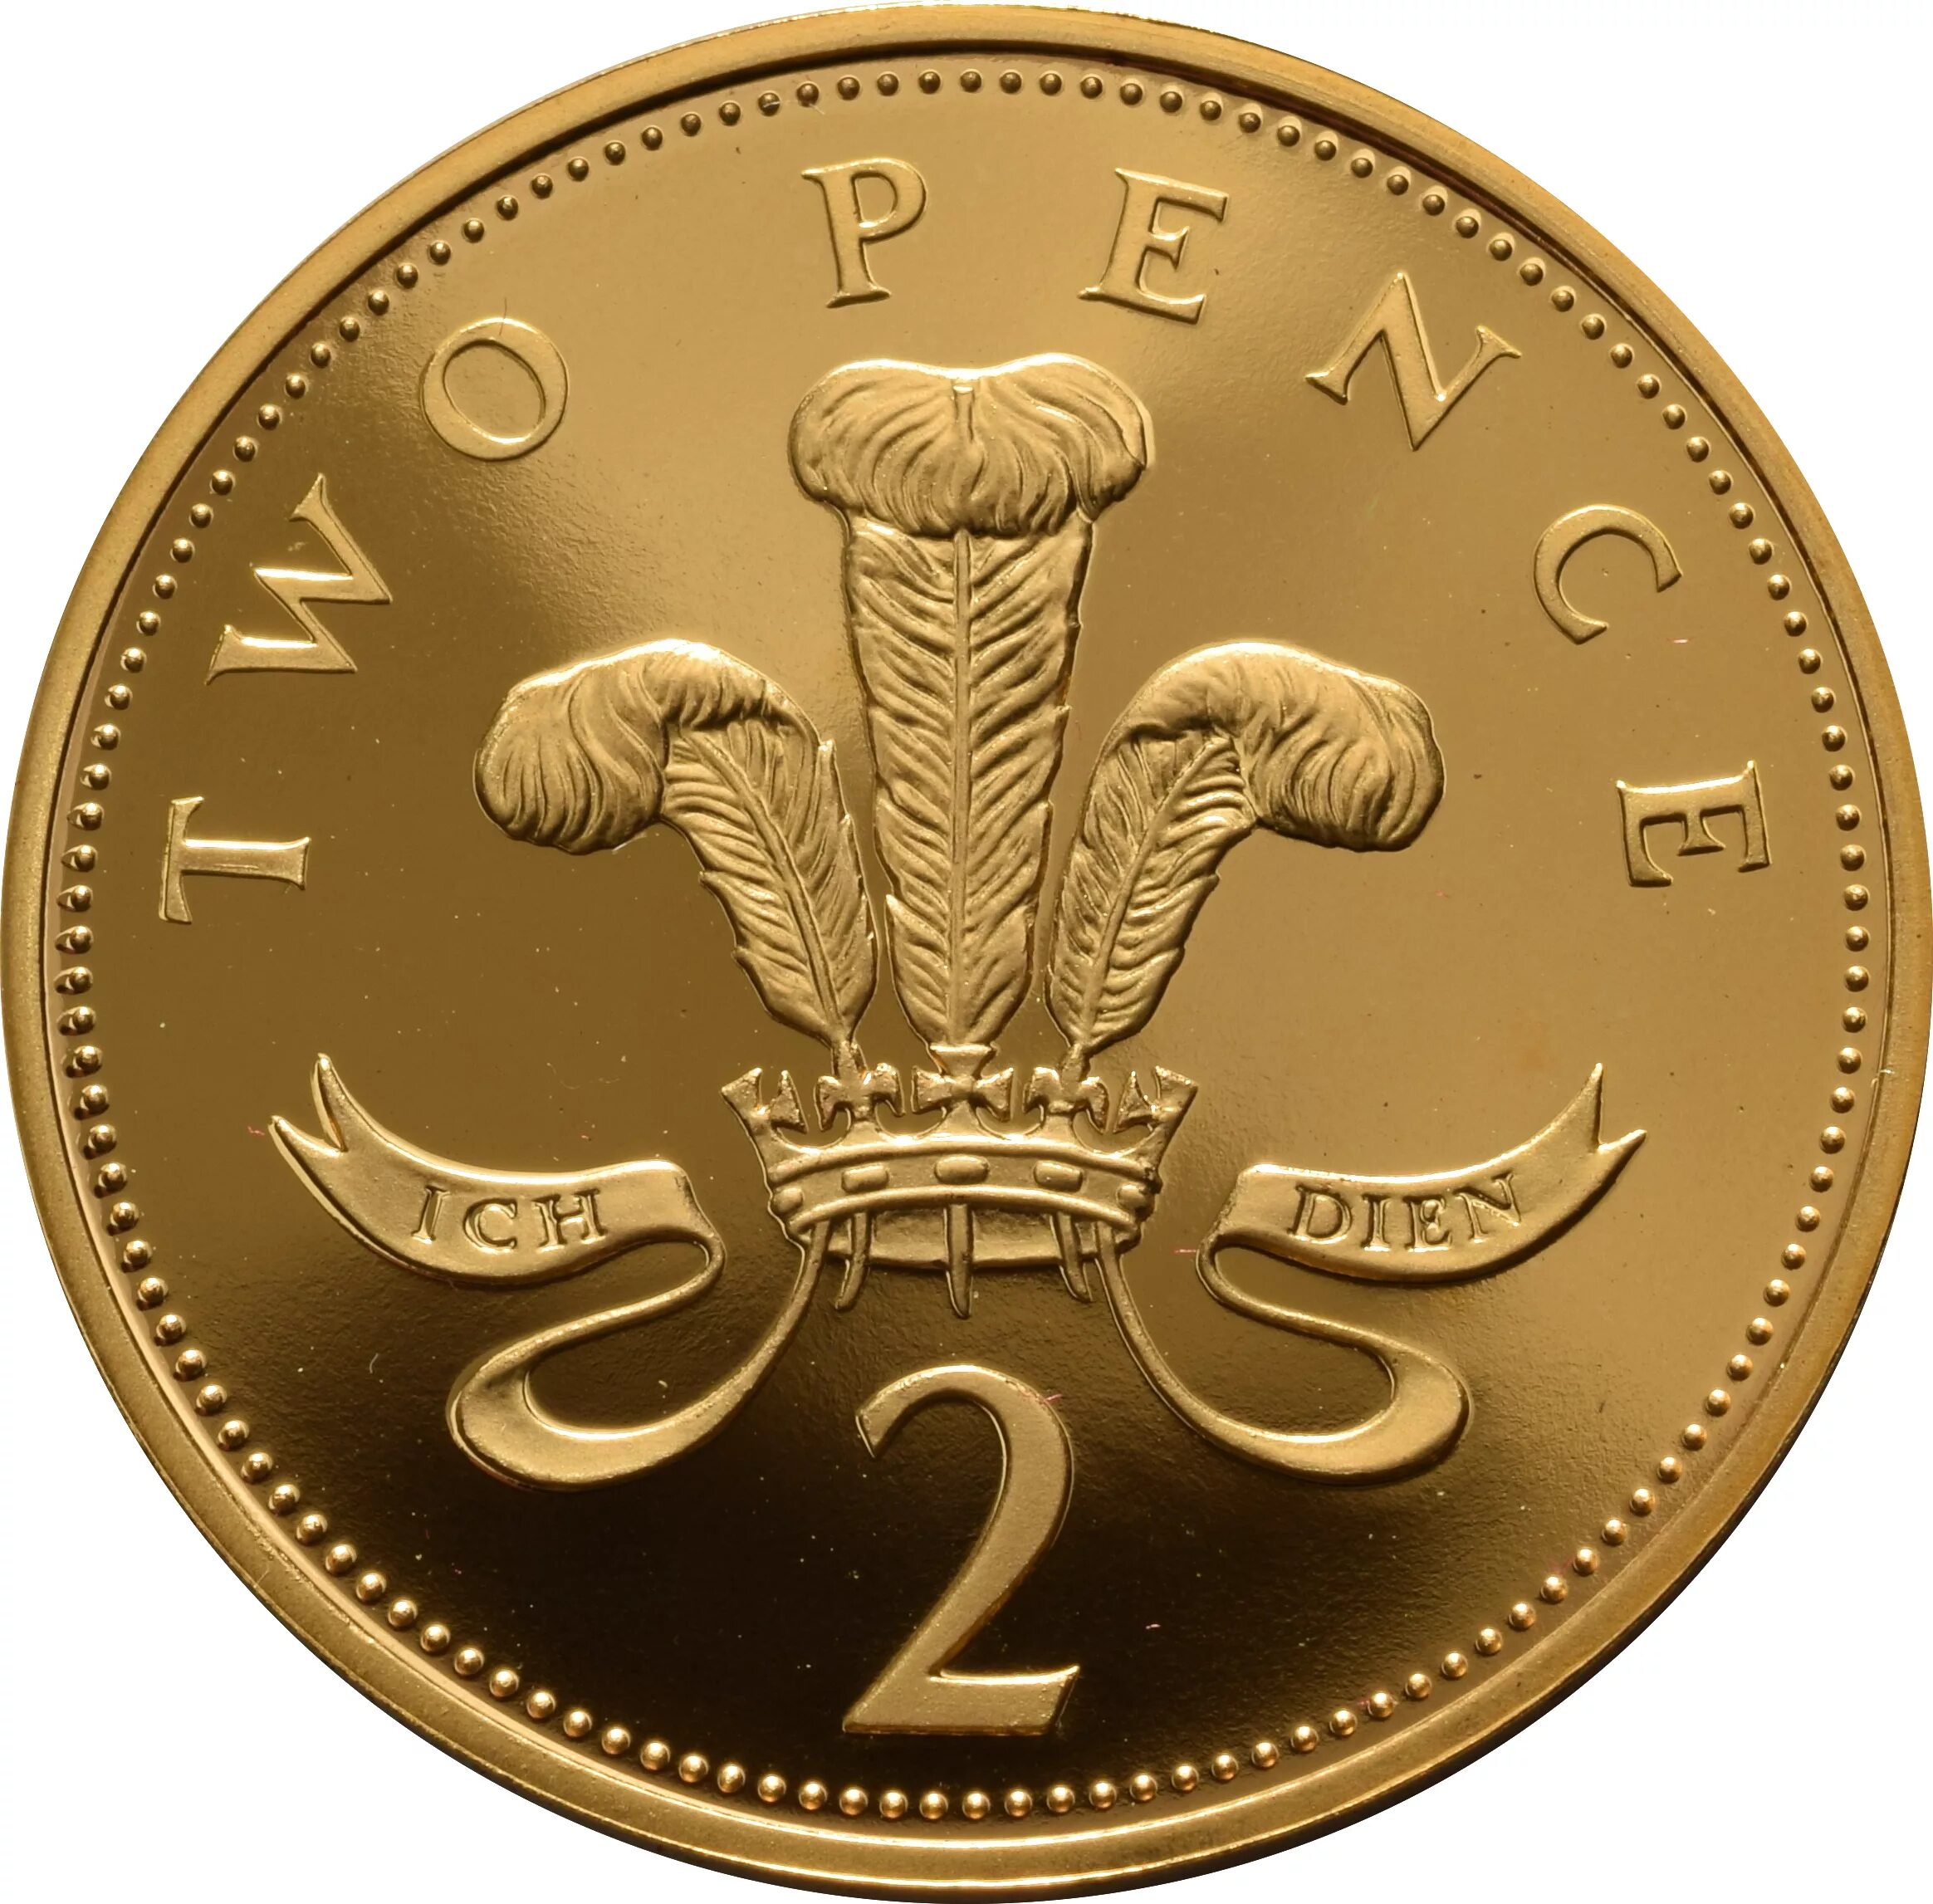 Two coins. Монета two Pence. 2 Пенса 2008 Великобритания. Два пенса монета Великобритании. Валюта Великобритании пенни.